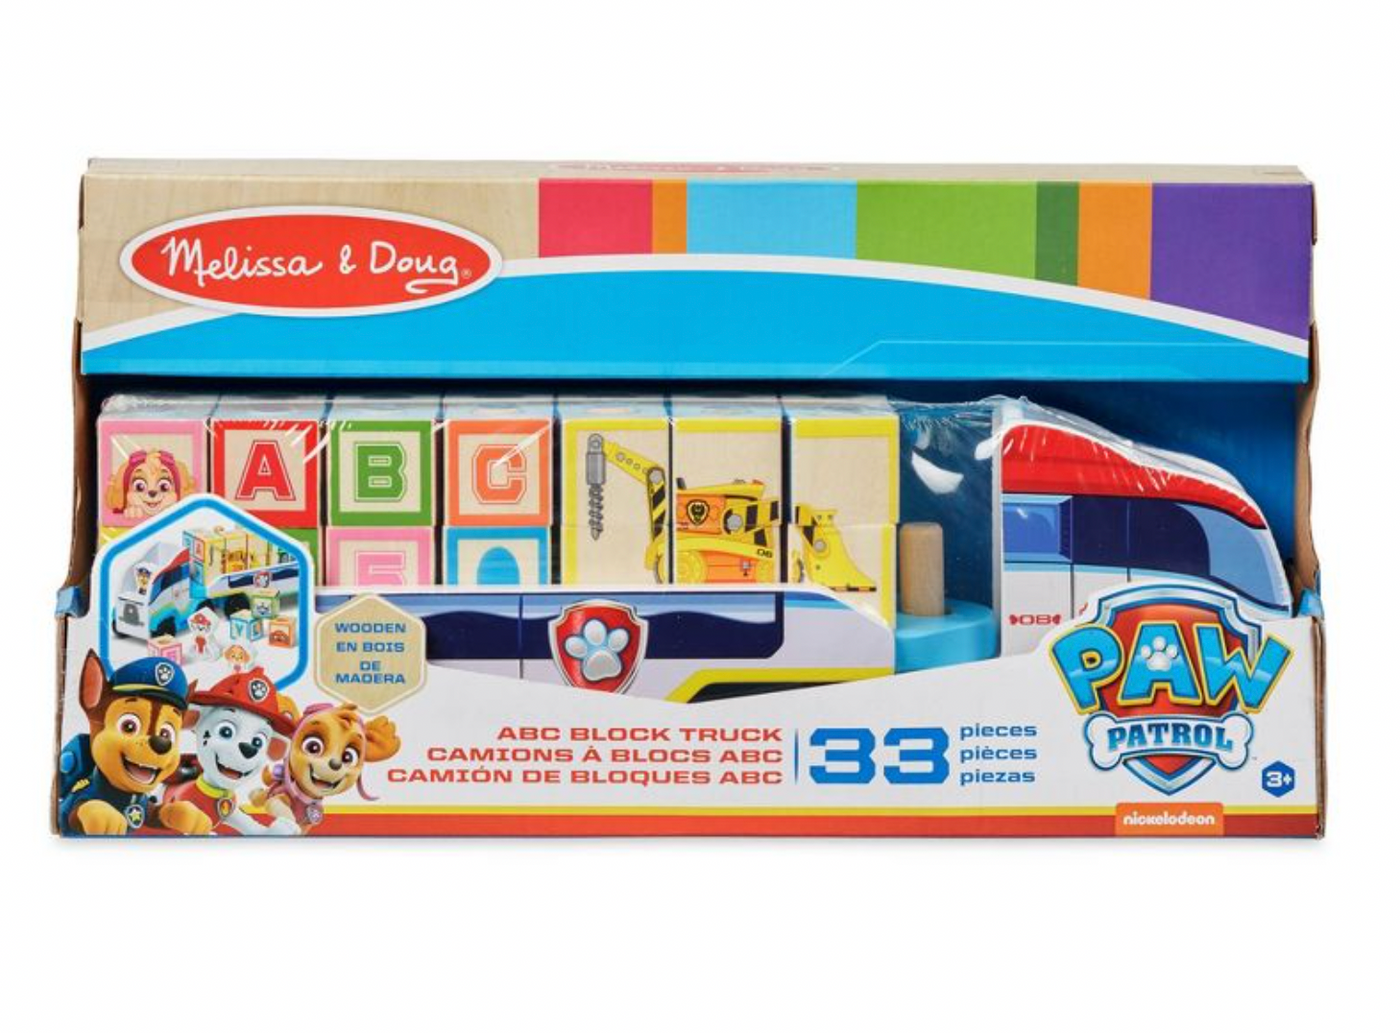 Melissa & Doug PAW Patrol ABC Wooden Block Truck Toy Set New with Box